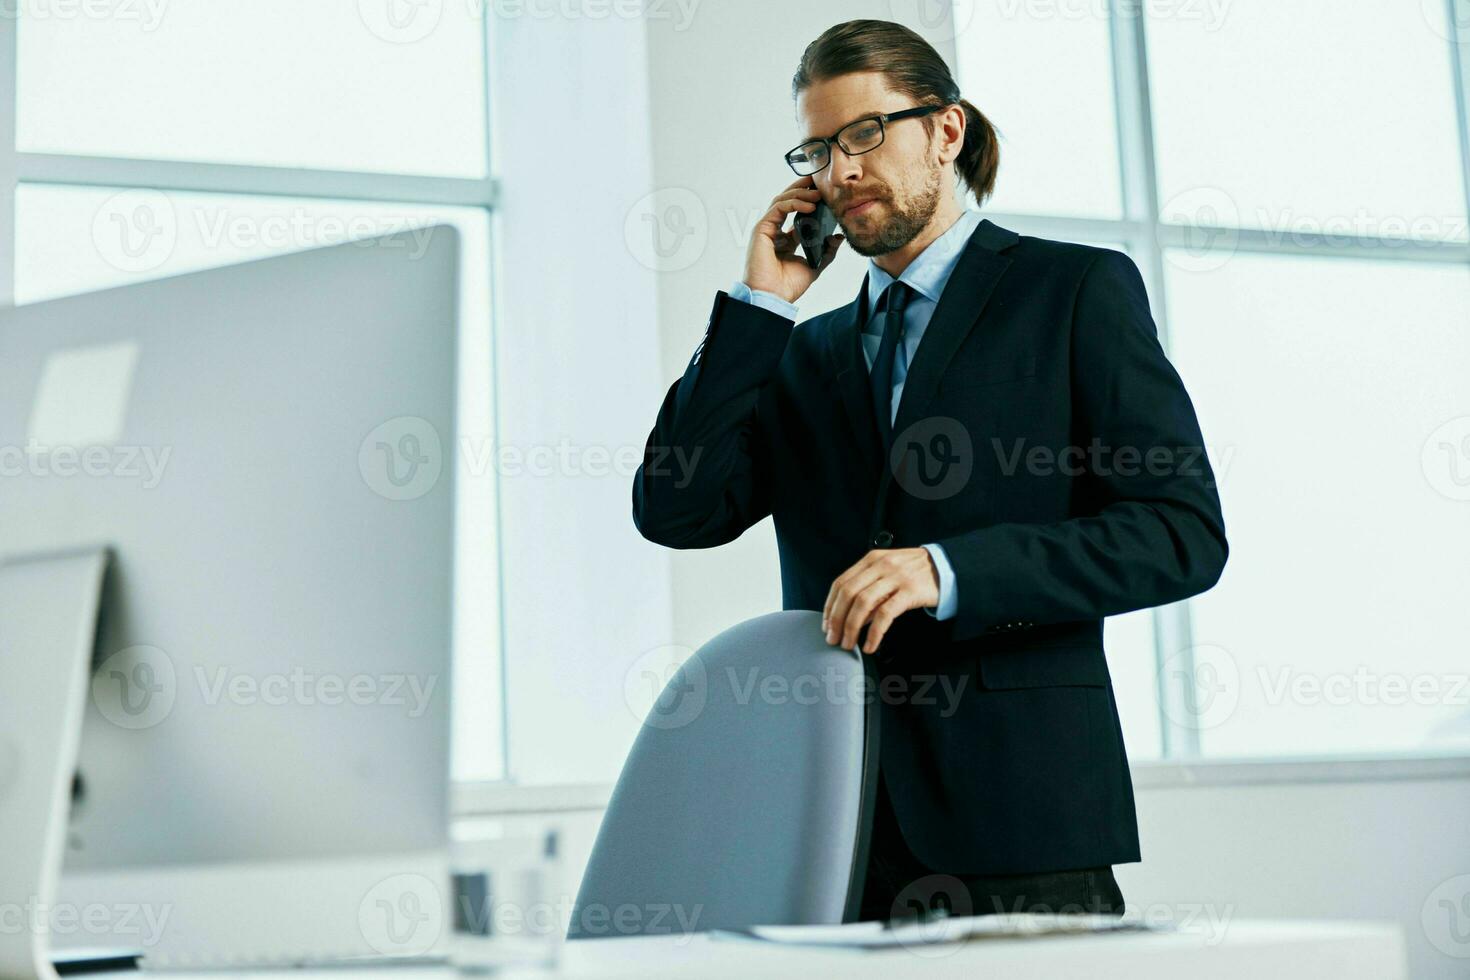 masculino gerente con lentes auto confianza trabajo ejecutivo foto